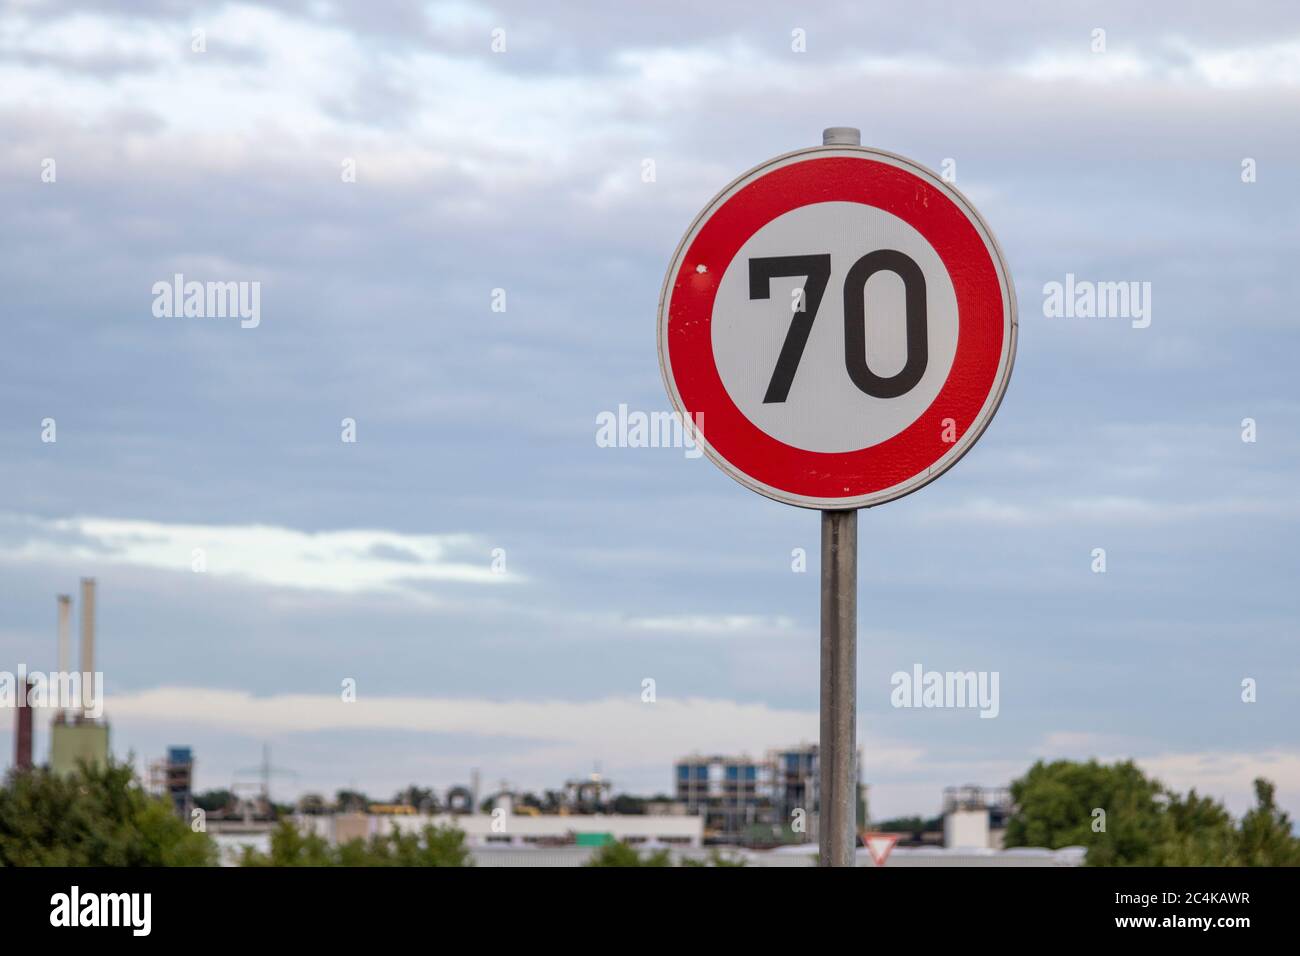 La señal de la carretera alemana de la zona 70 km / h en una zona rural, al aire libre Foto de stock